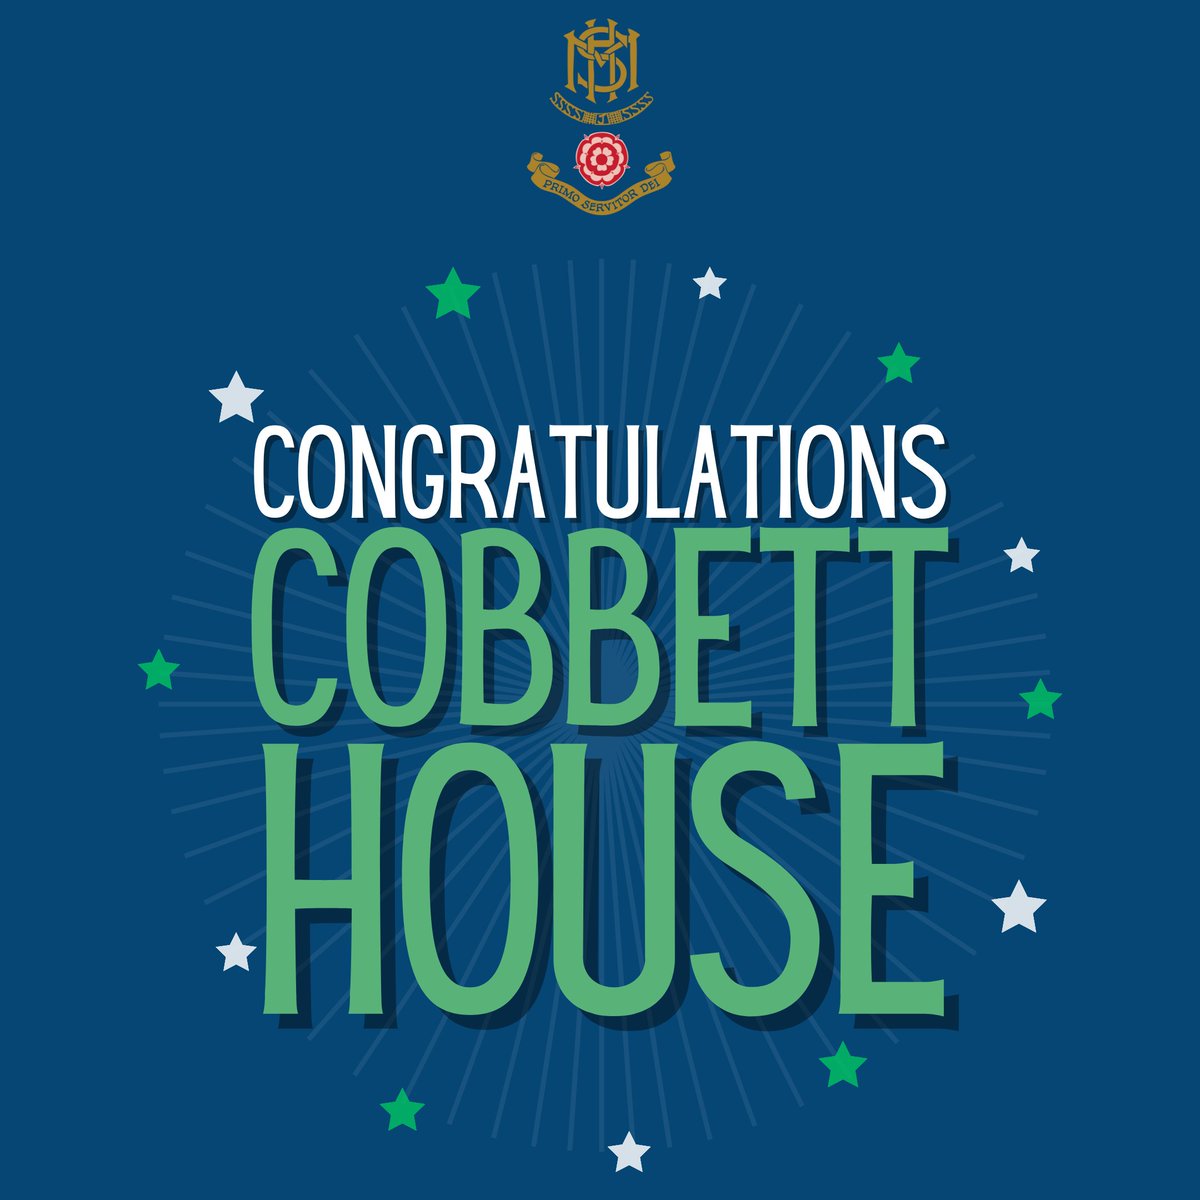 Congratulations to Cobbett who were this half-term's house point champions!

#MoreHouseSchool #MHS #farnham #surreyschools #independentschool #transformativeeducation #housepoints